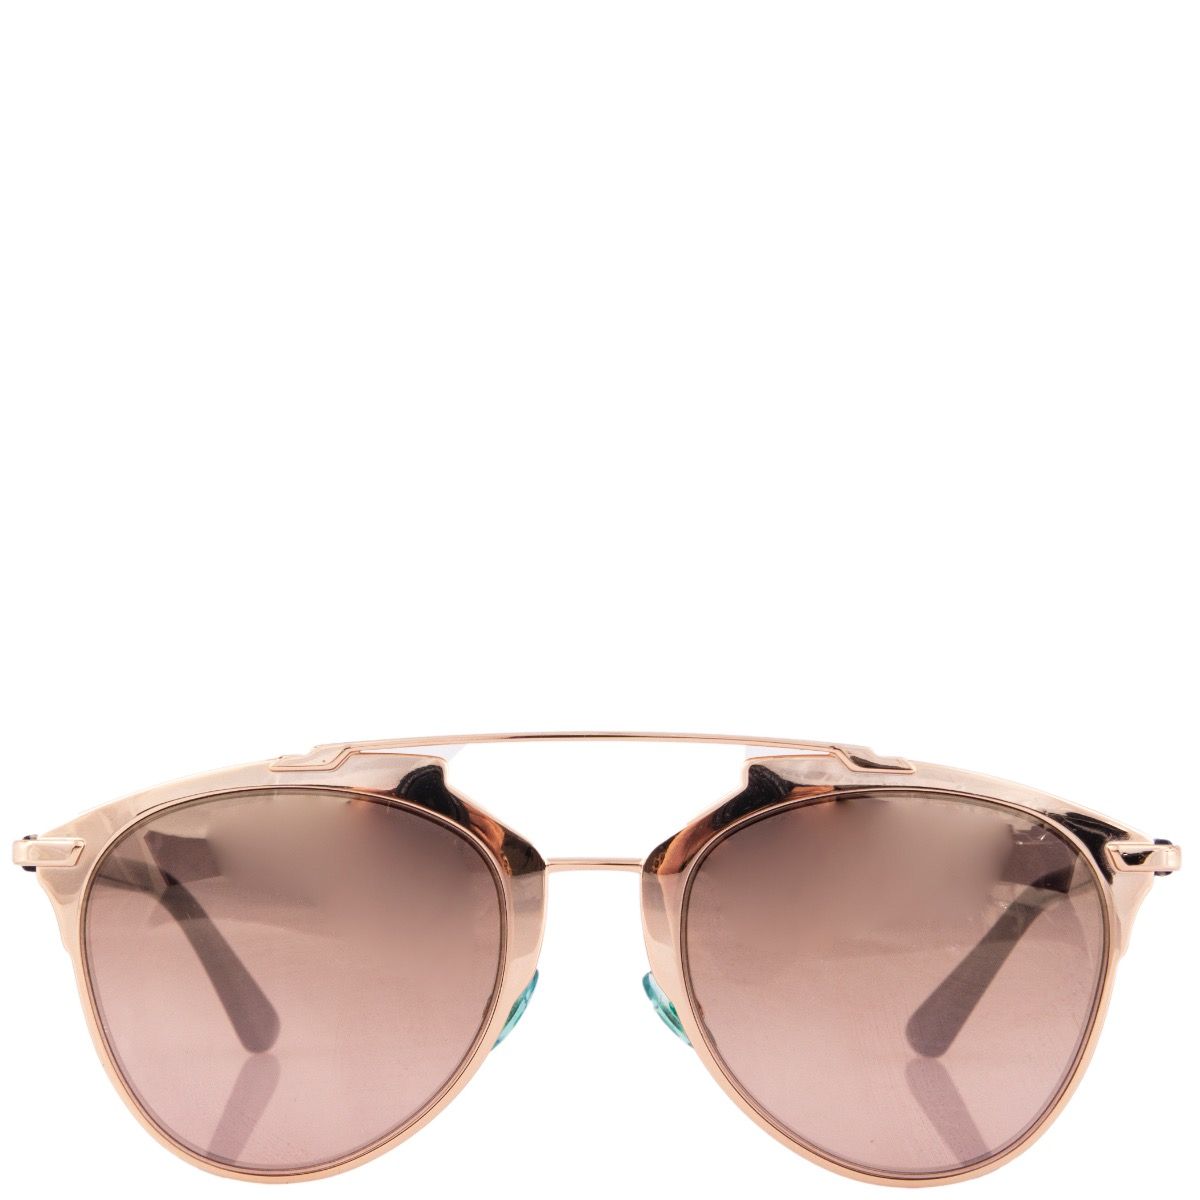 Christian Dior 'Reflected' Sunglasses